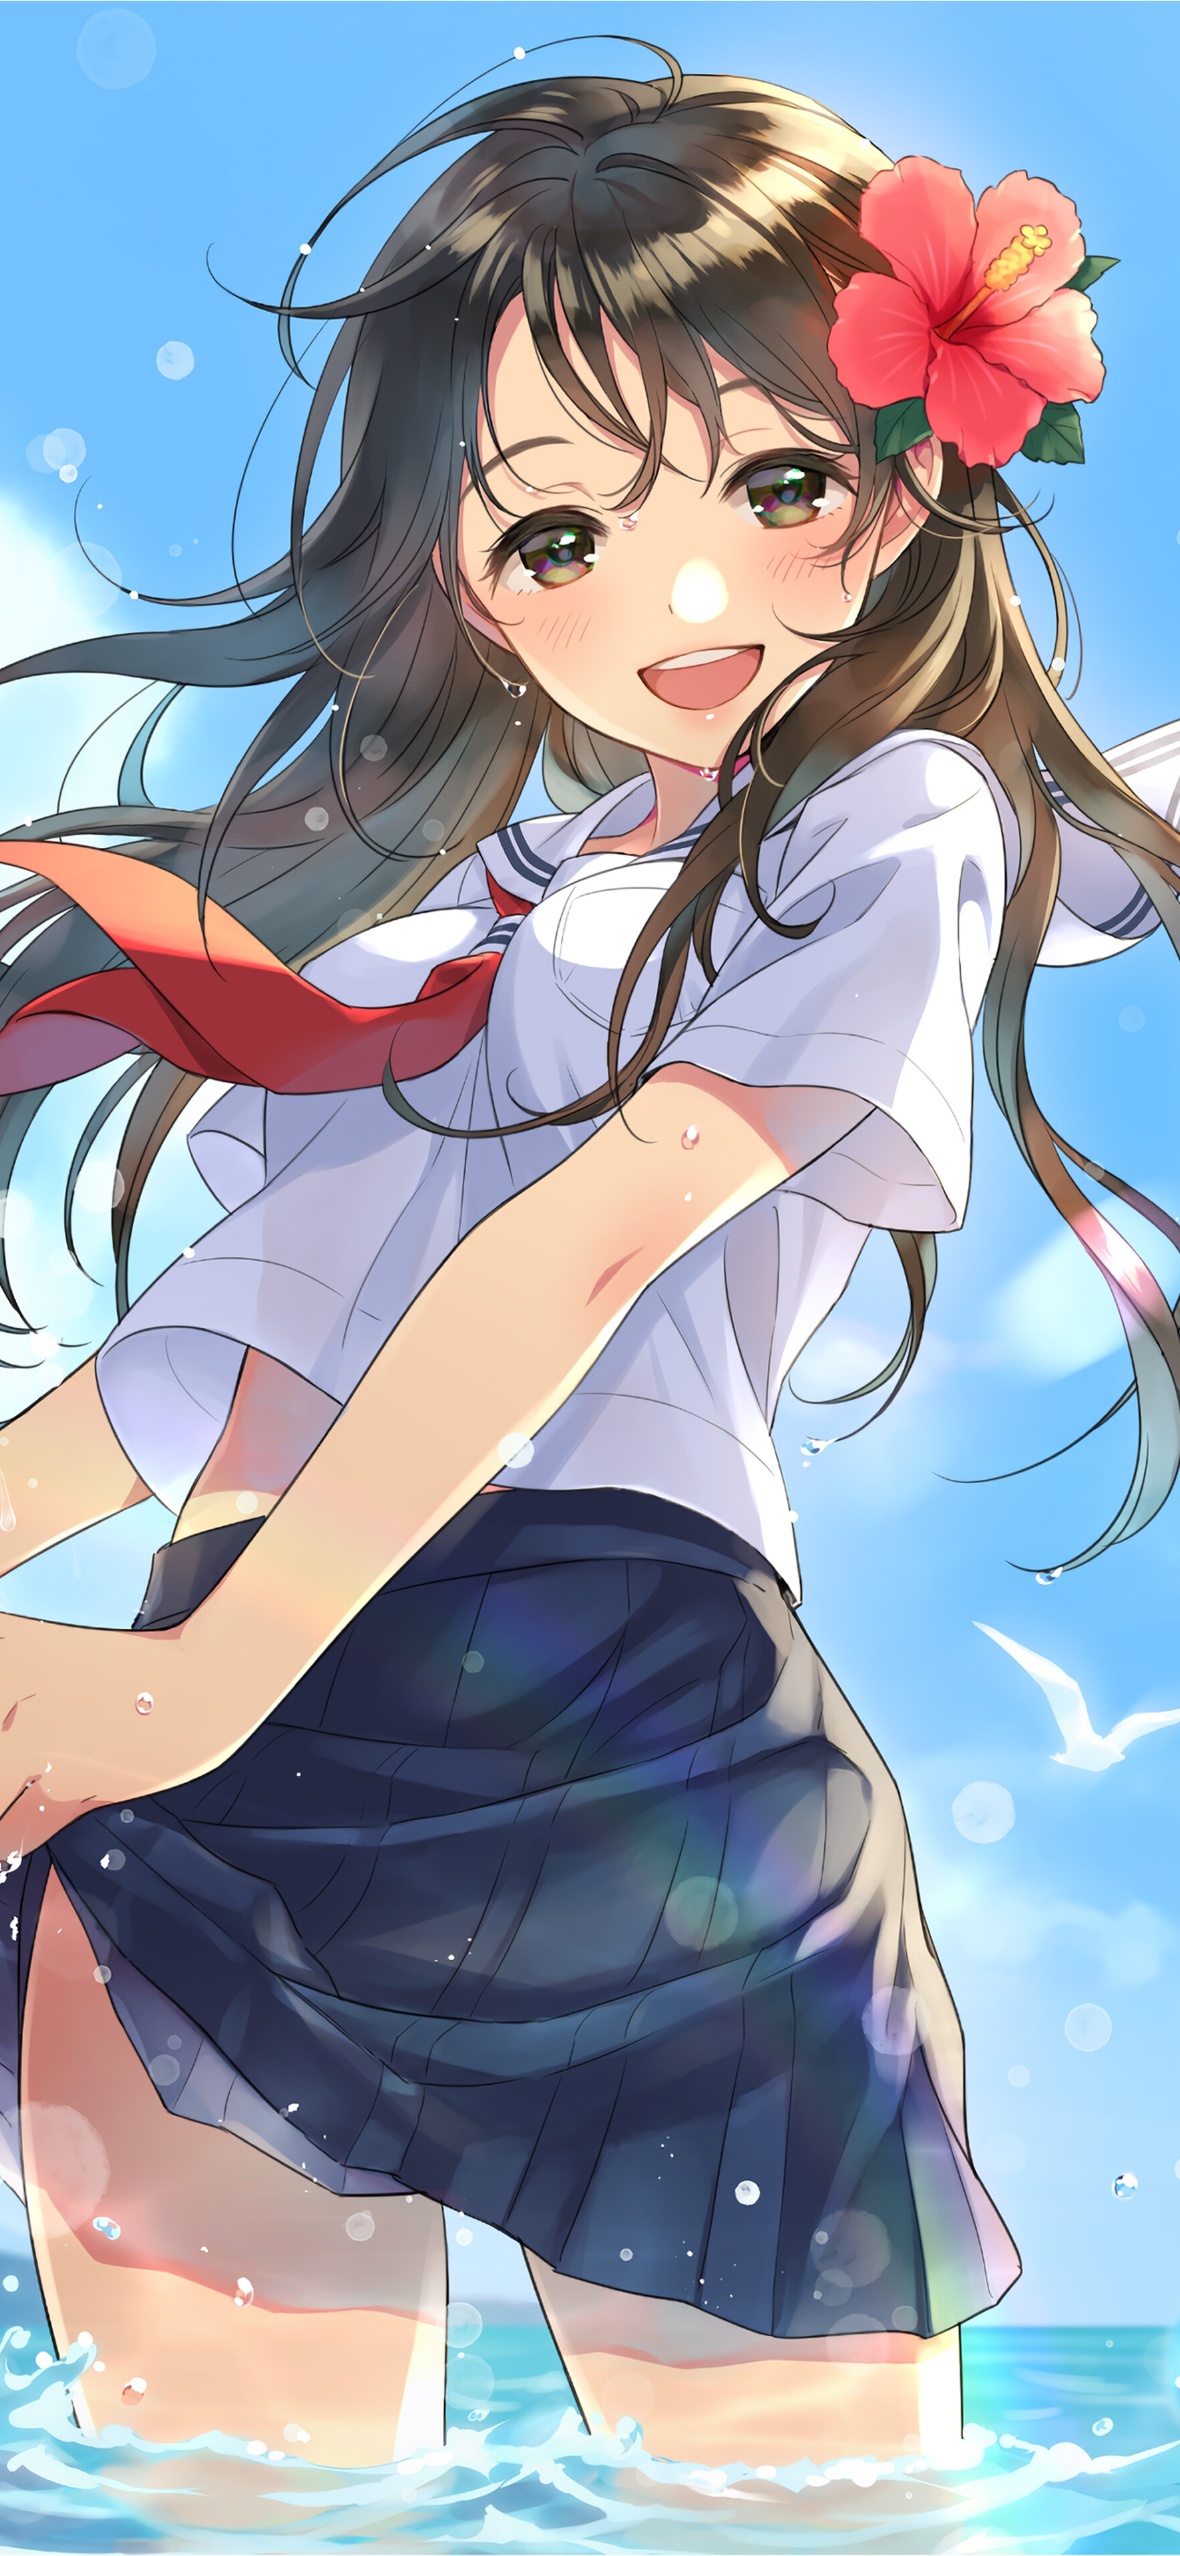 Cute Anime Girl Wallpaper iPhone 7